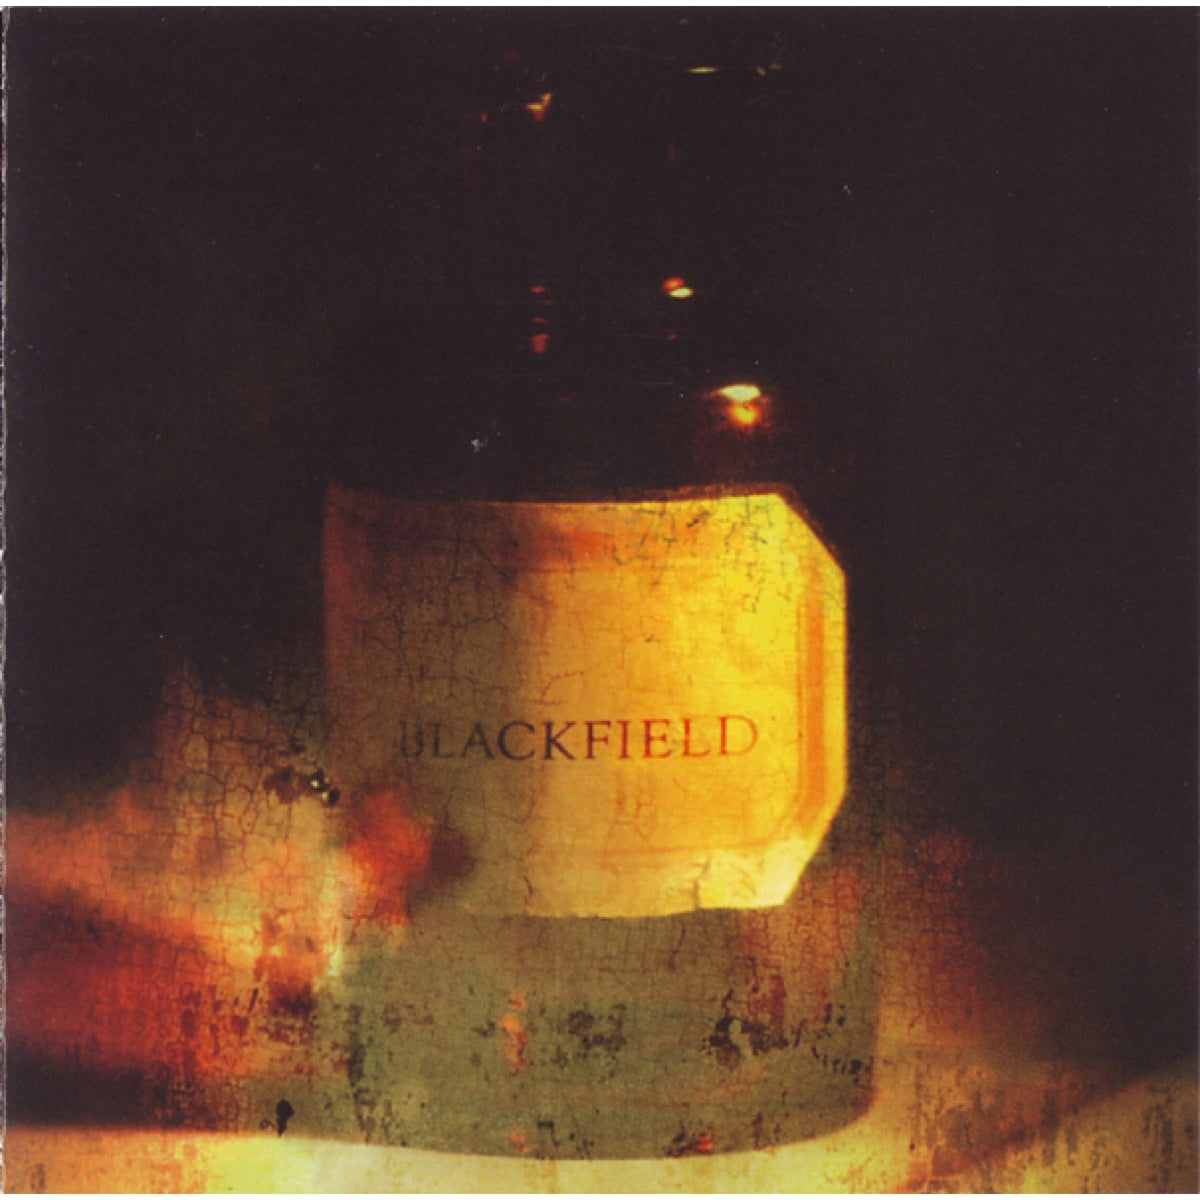 Blackfield - Blackfield ( 20th Anniversary Marble Vinyl Edition ) - KSCOPE1233